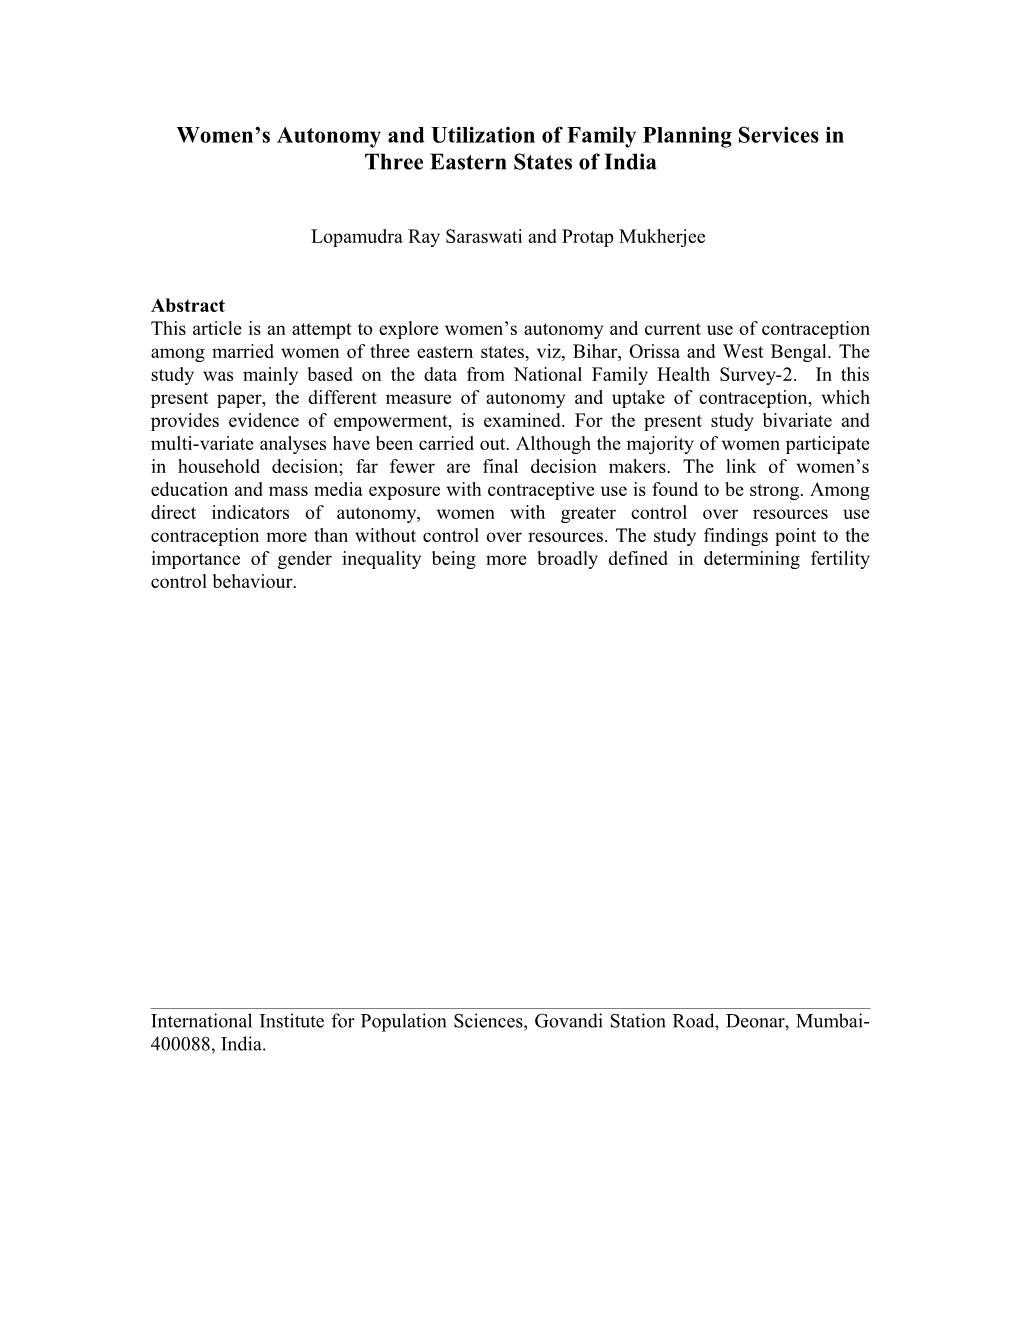 Women S Autonomy and Fertility Control Behaviour in Three Eastern States of India